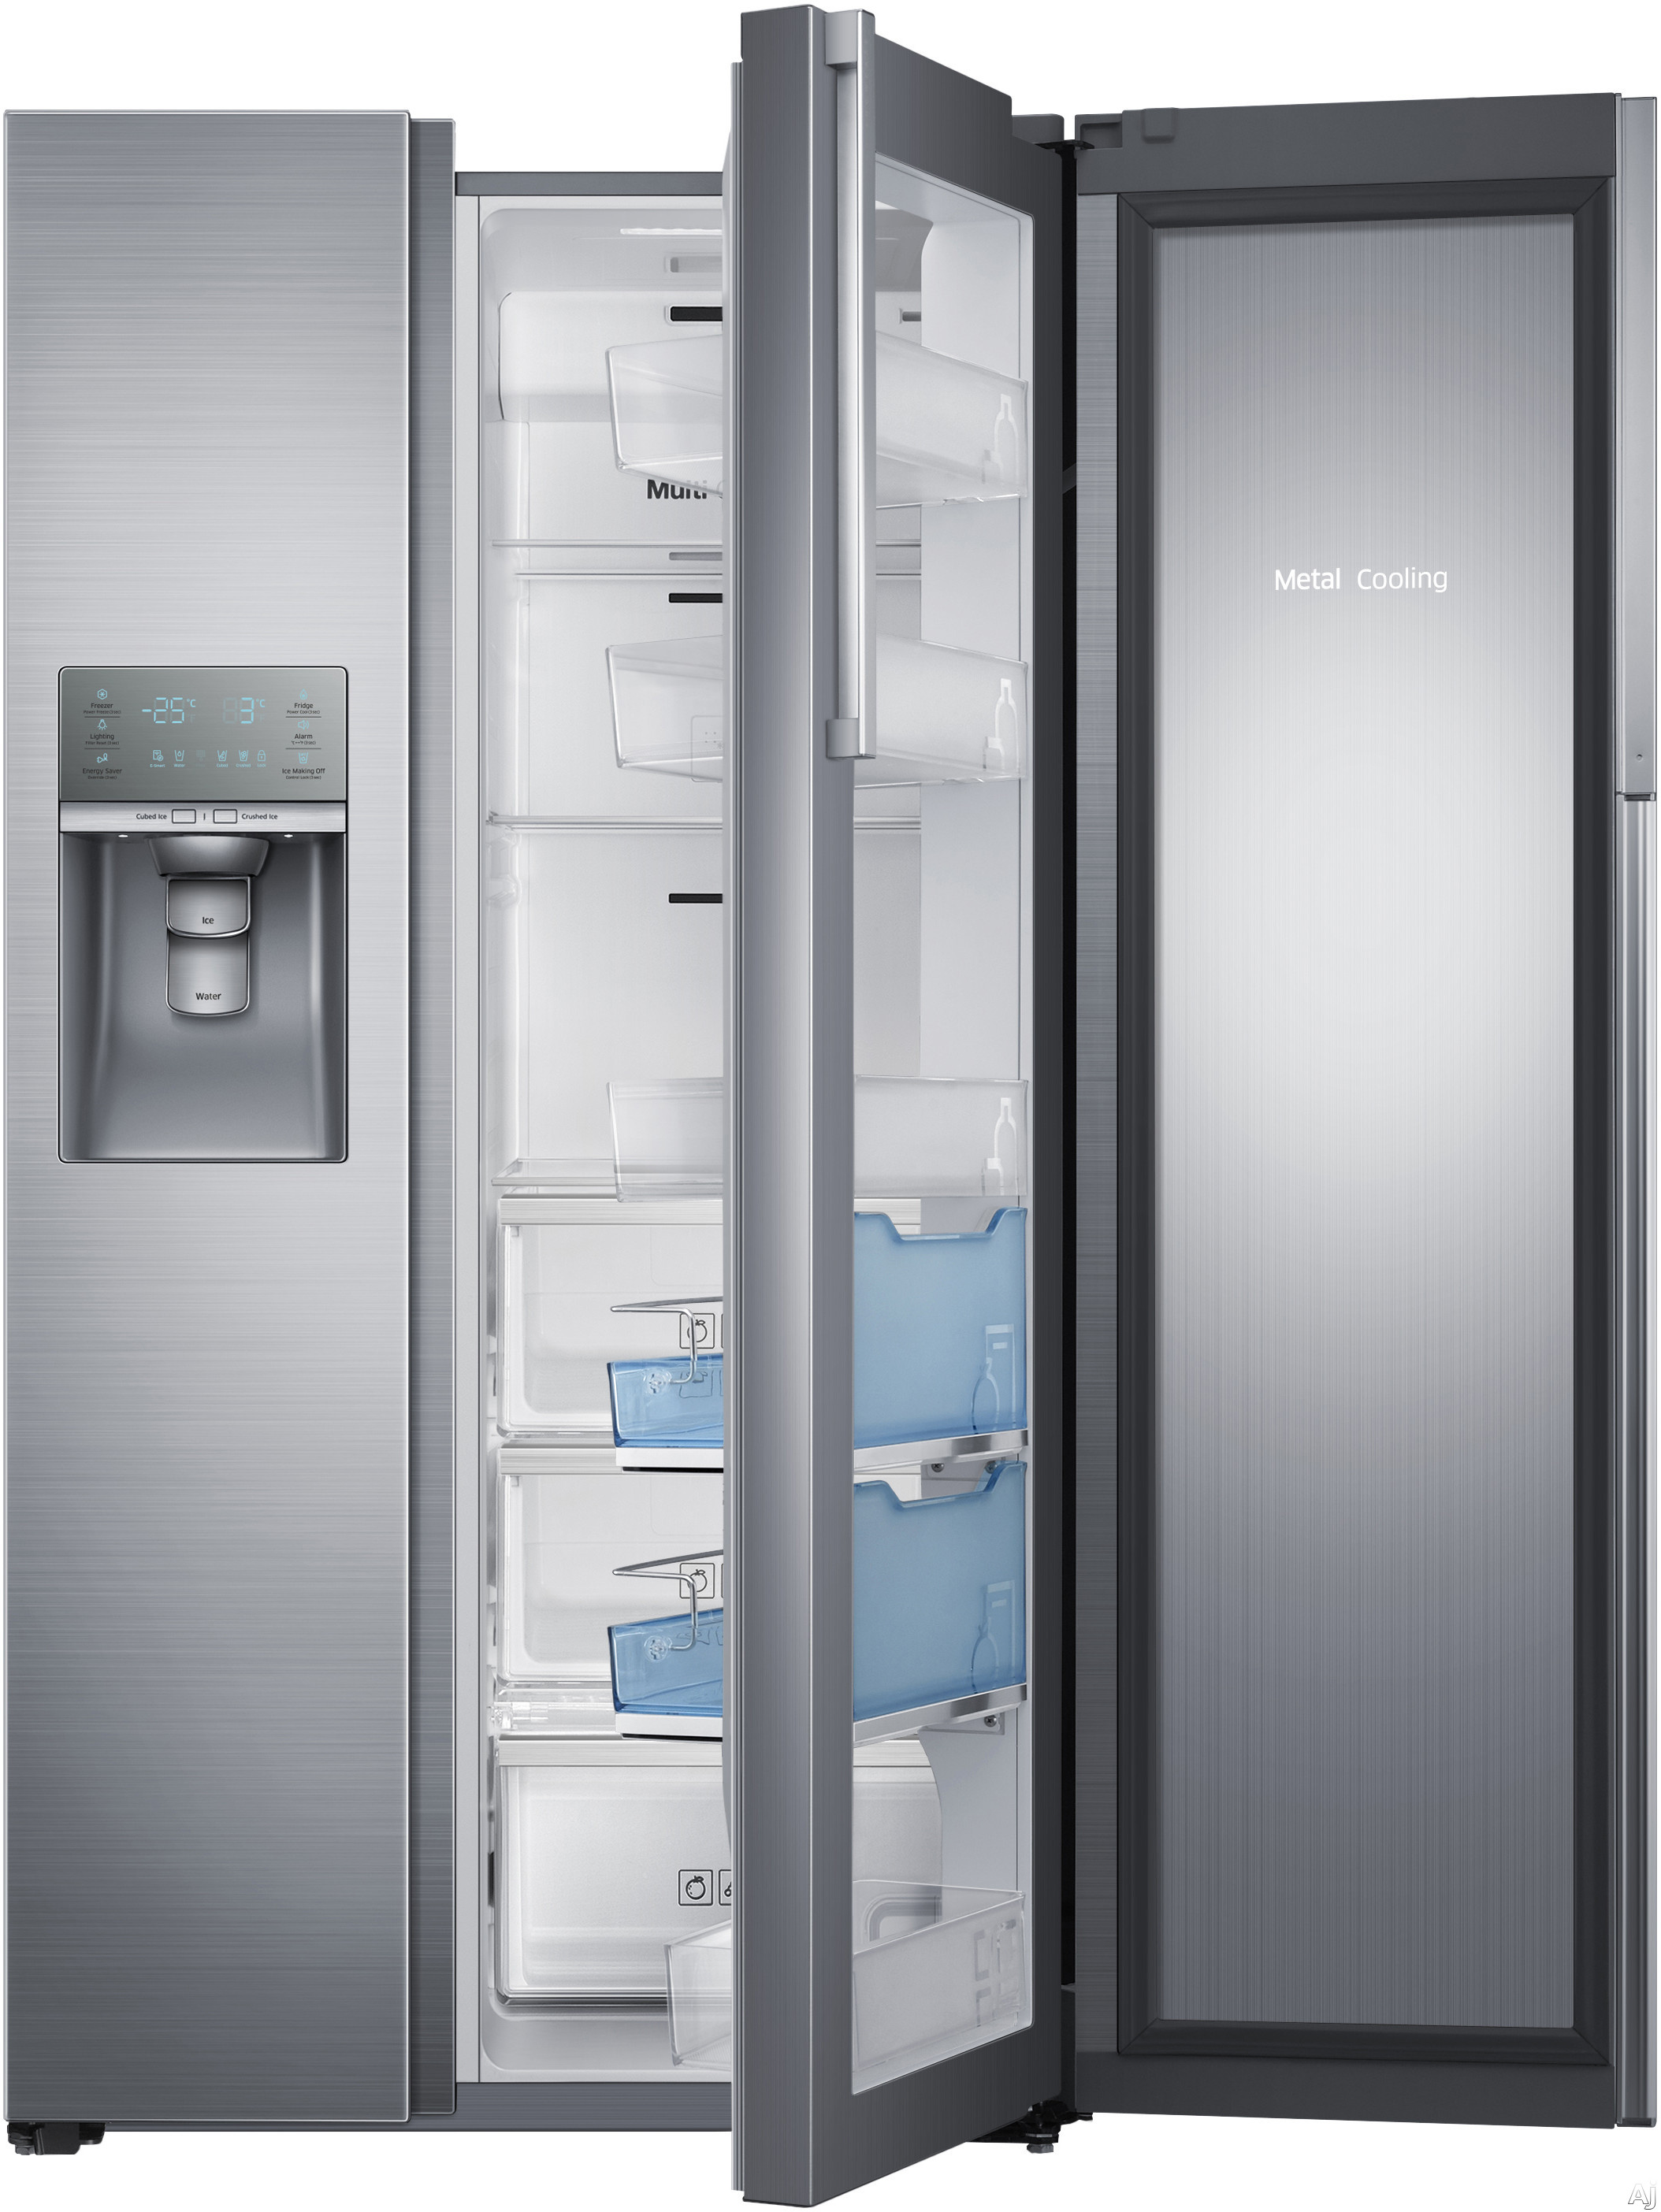 Samsung refrigerators counter depth side by side